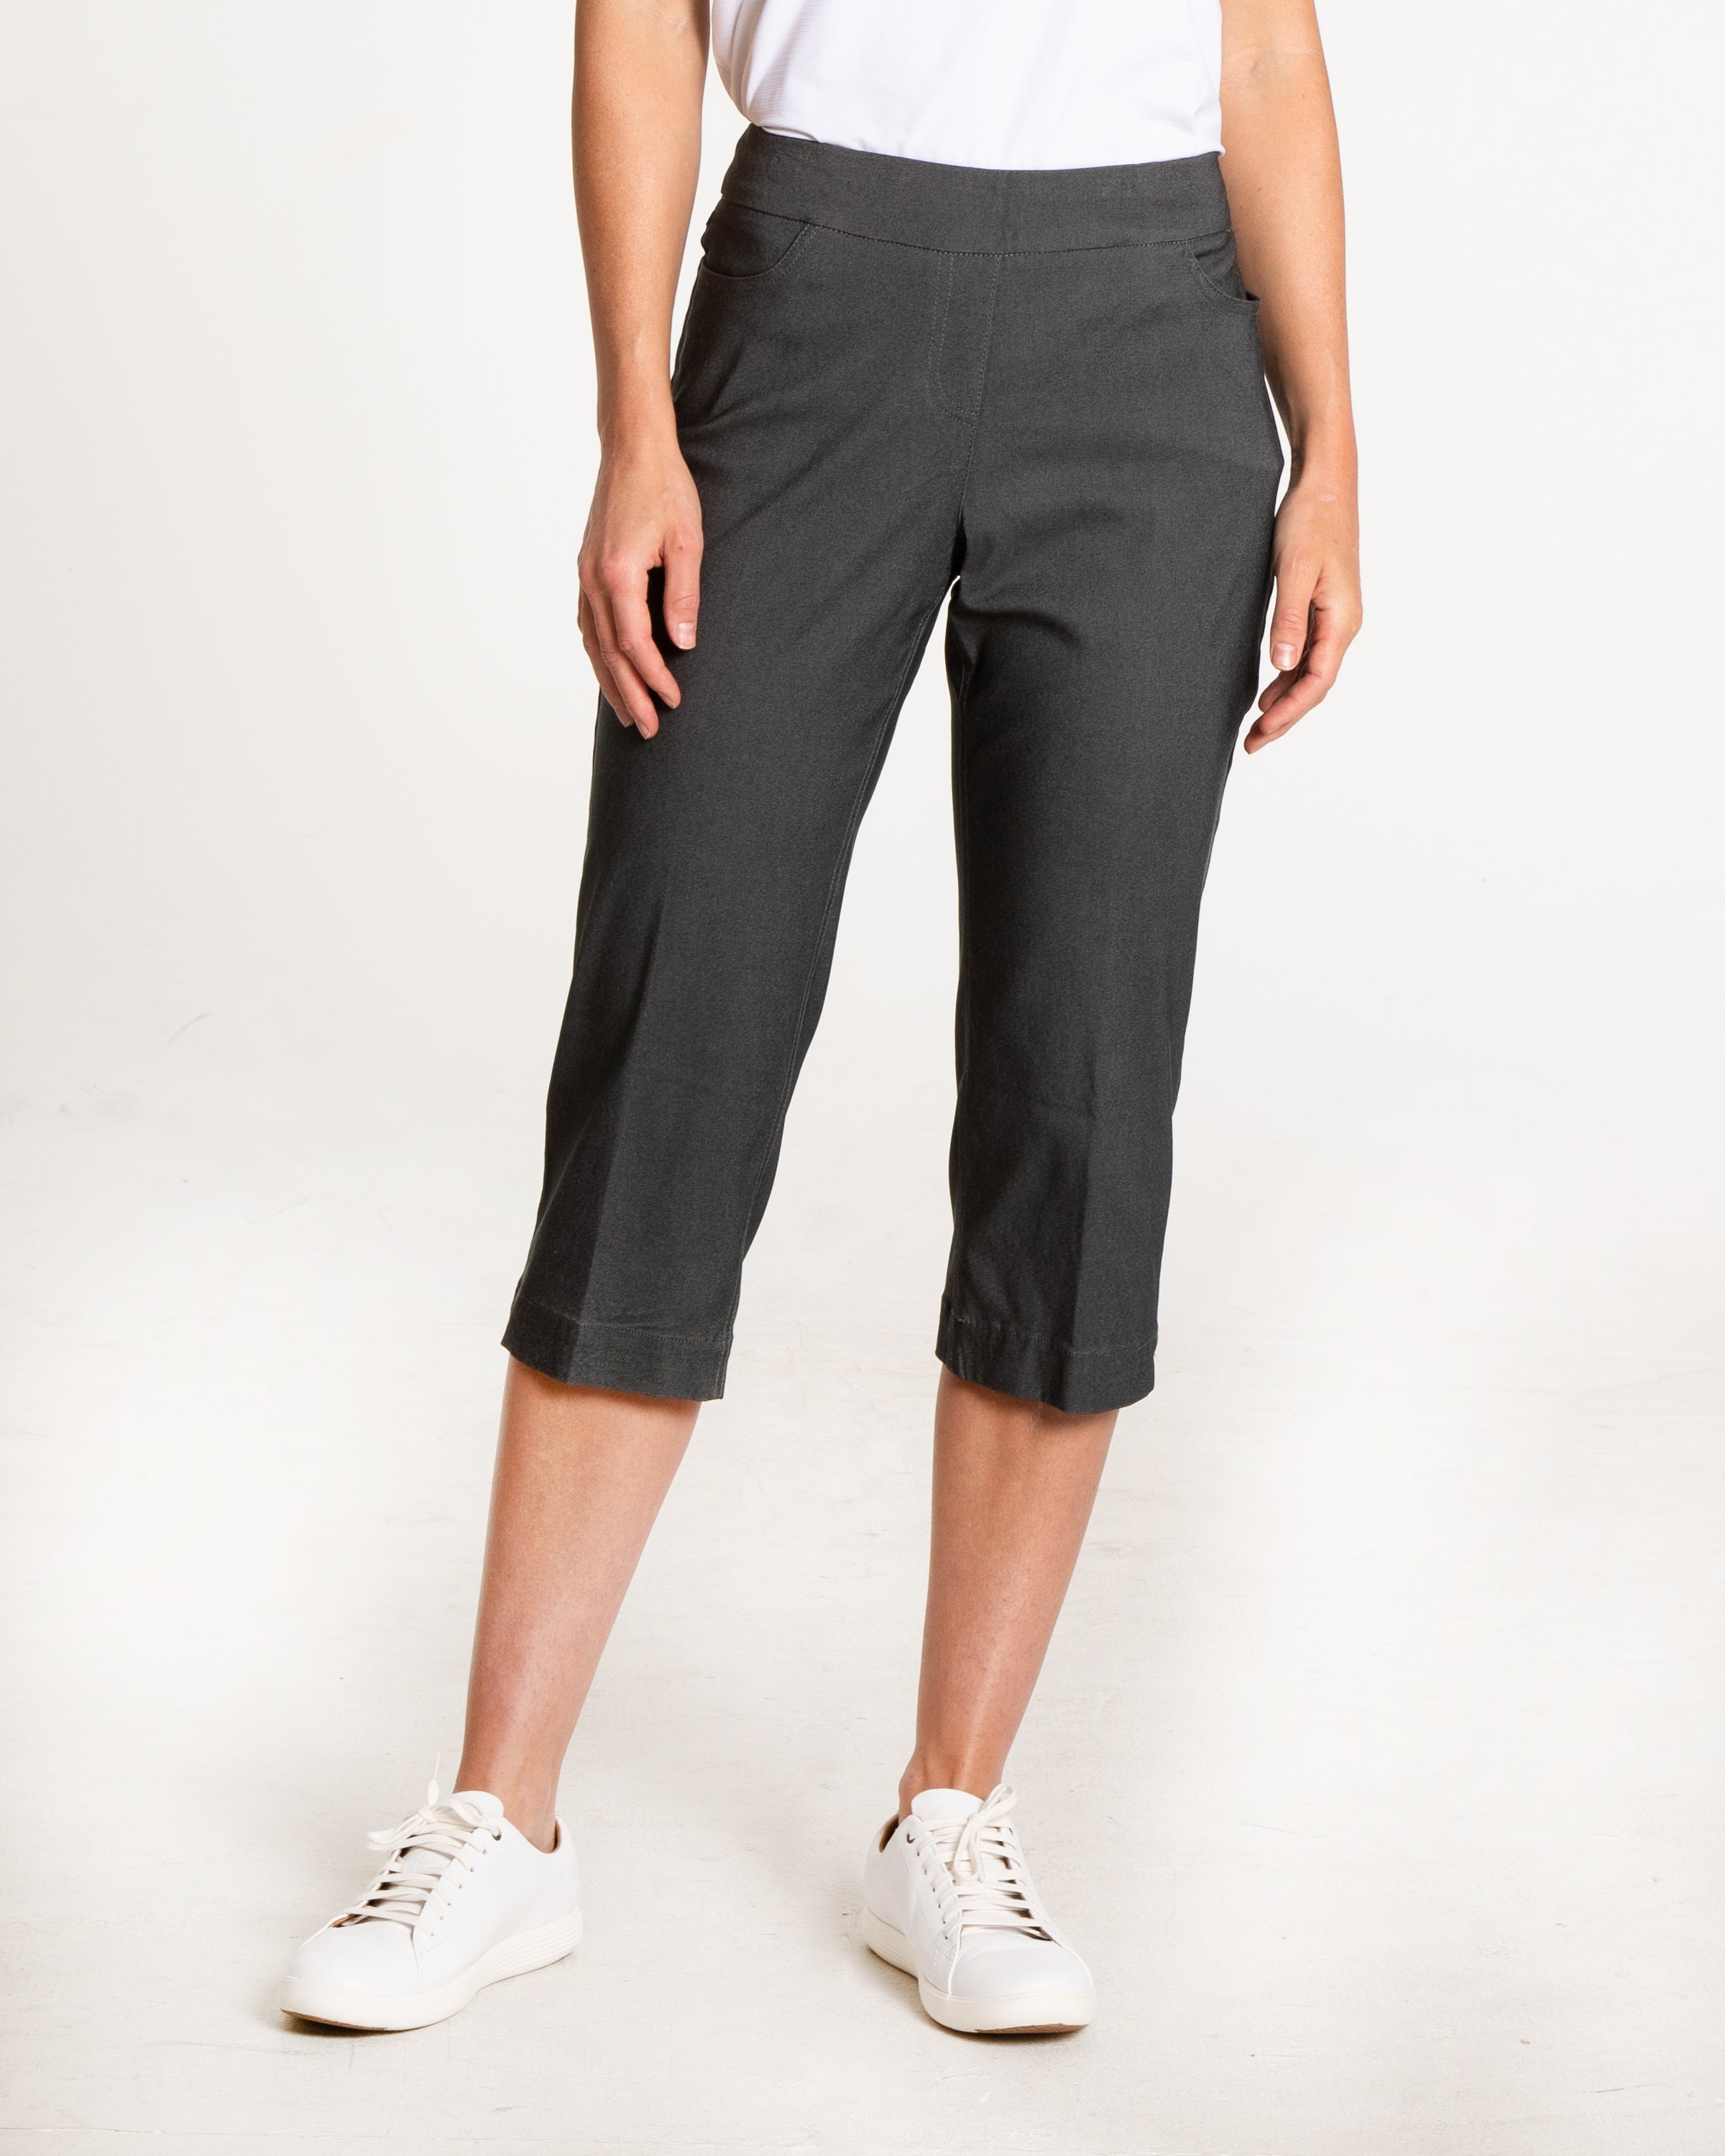 Women's Black Trousers, Capris & Shorts – Slimsation By Multiples